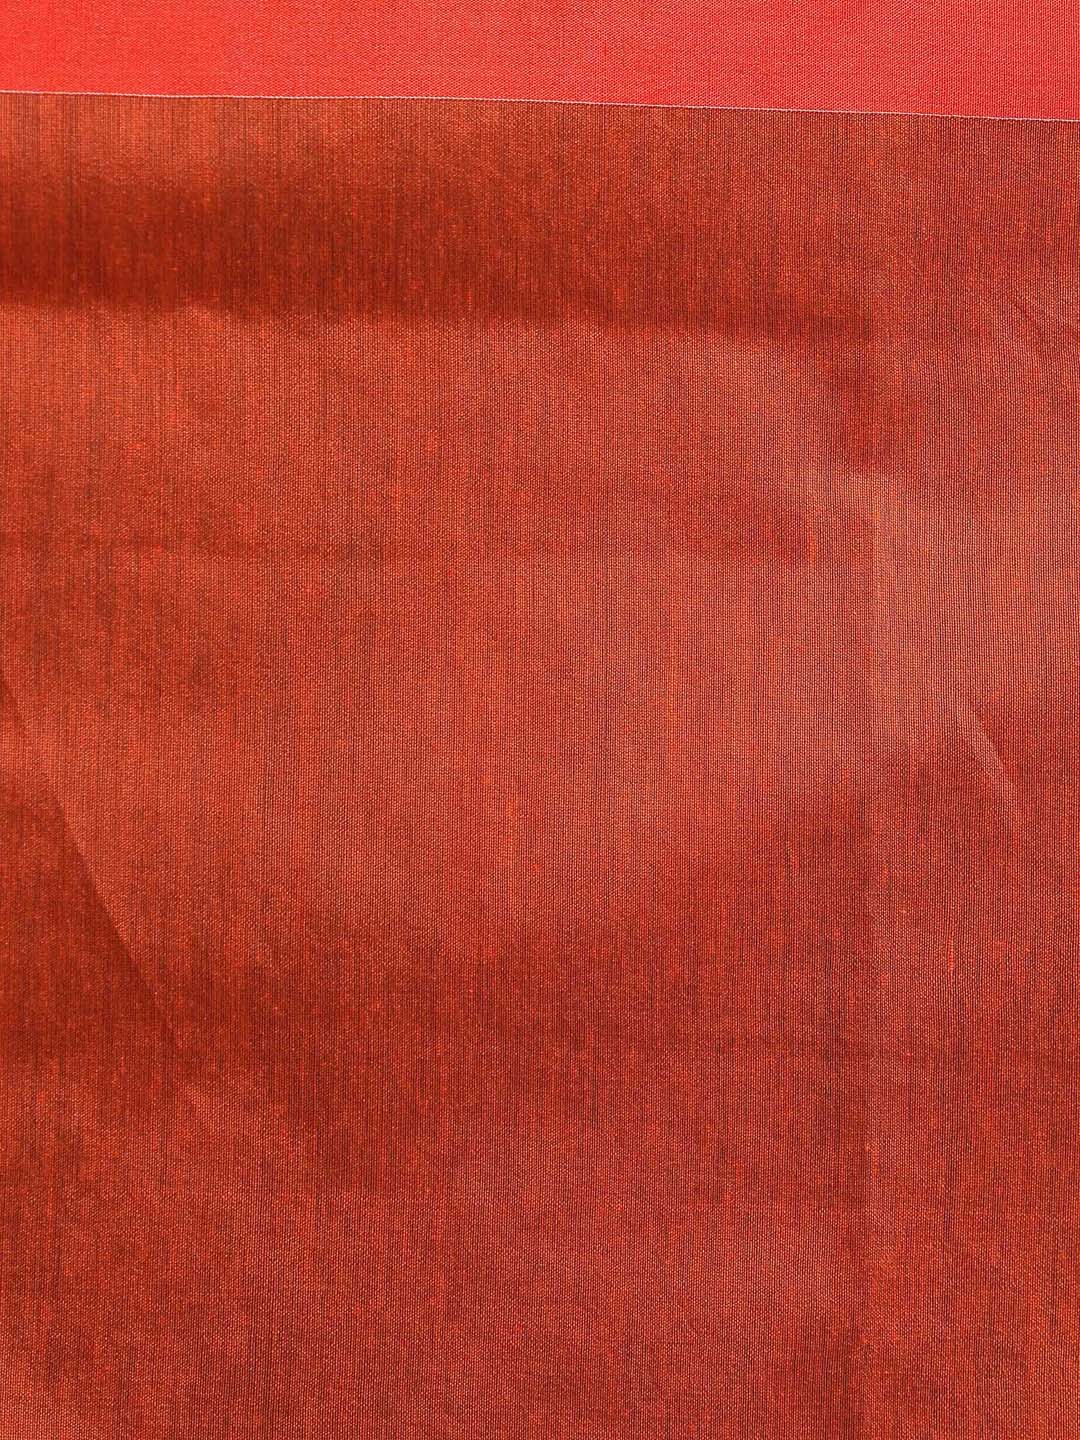 Indethnic Magenta and Orange Solid Colour Blocked Saree - Saree Detail View